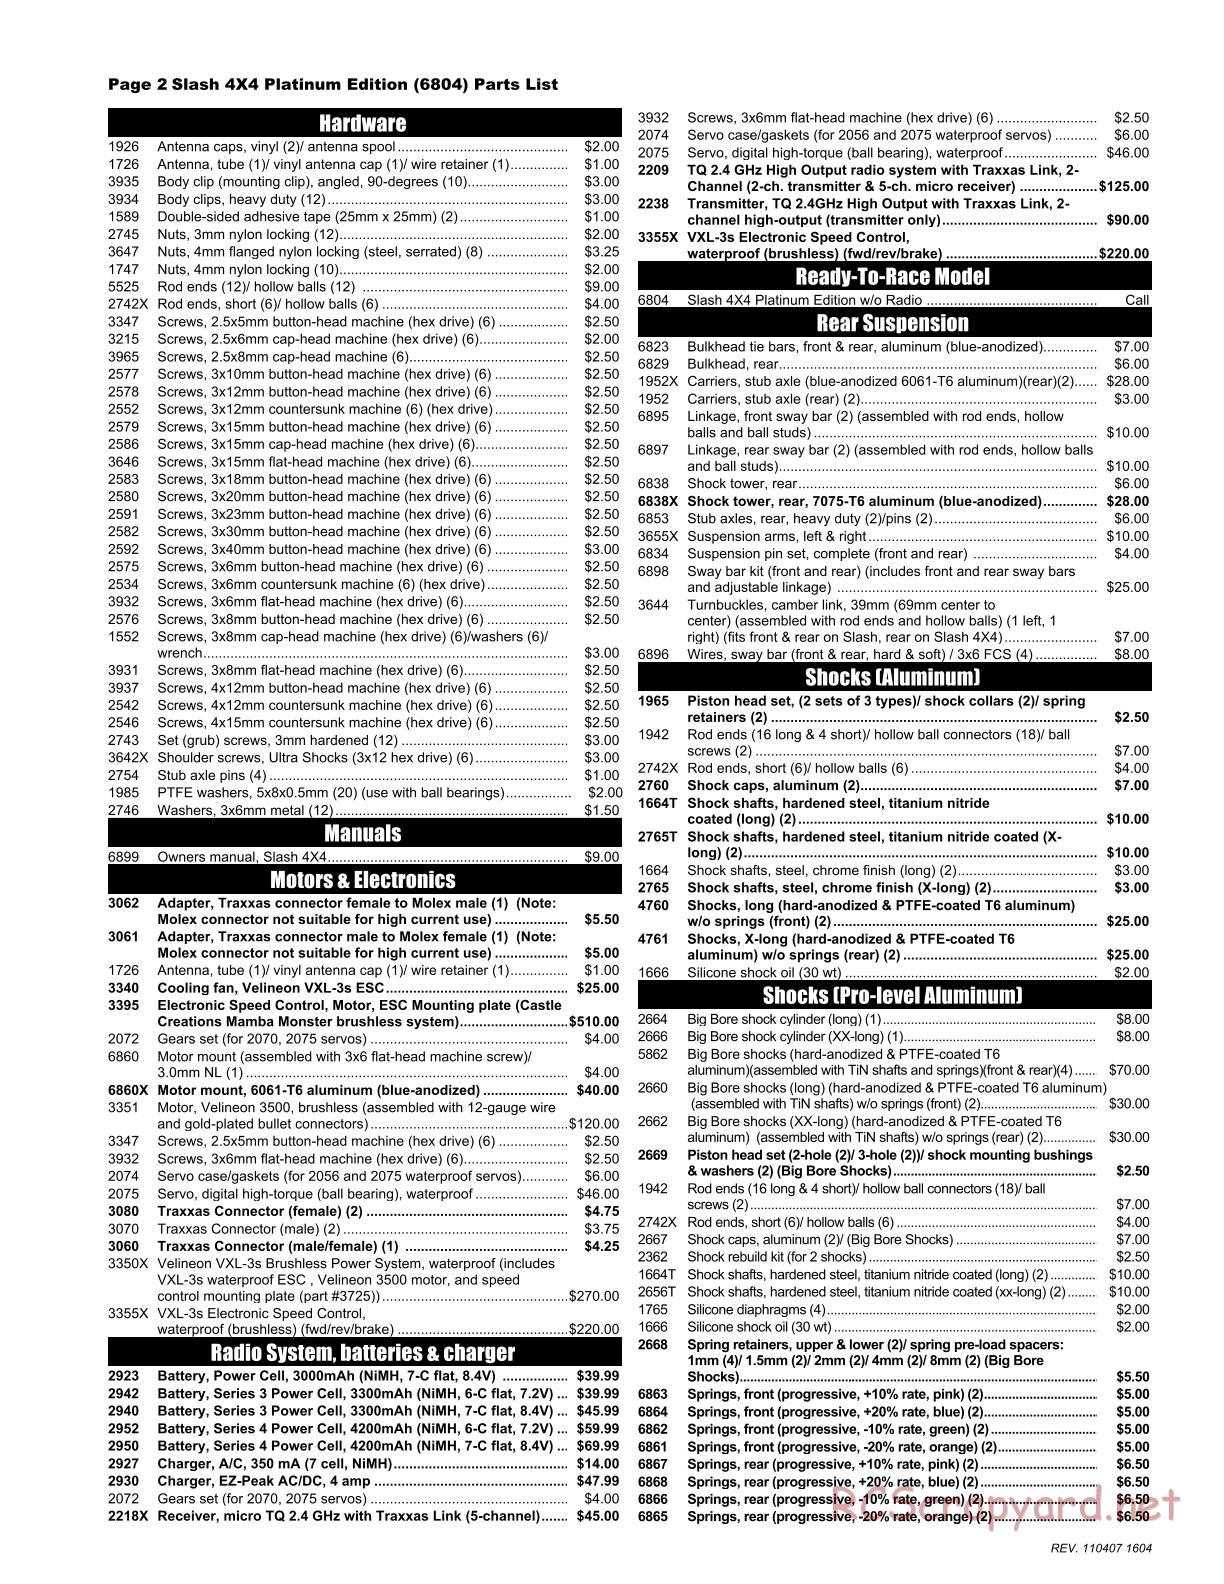 Traxxas - Slash 4x4 Platinum Ed (2010) - Parts List - Page 2